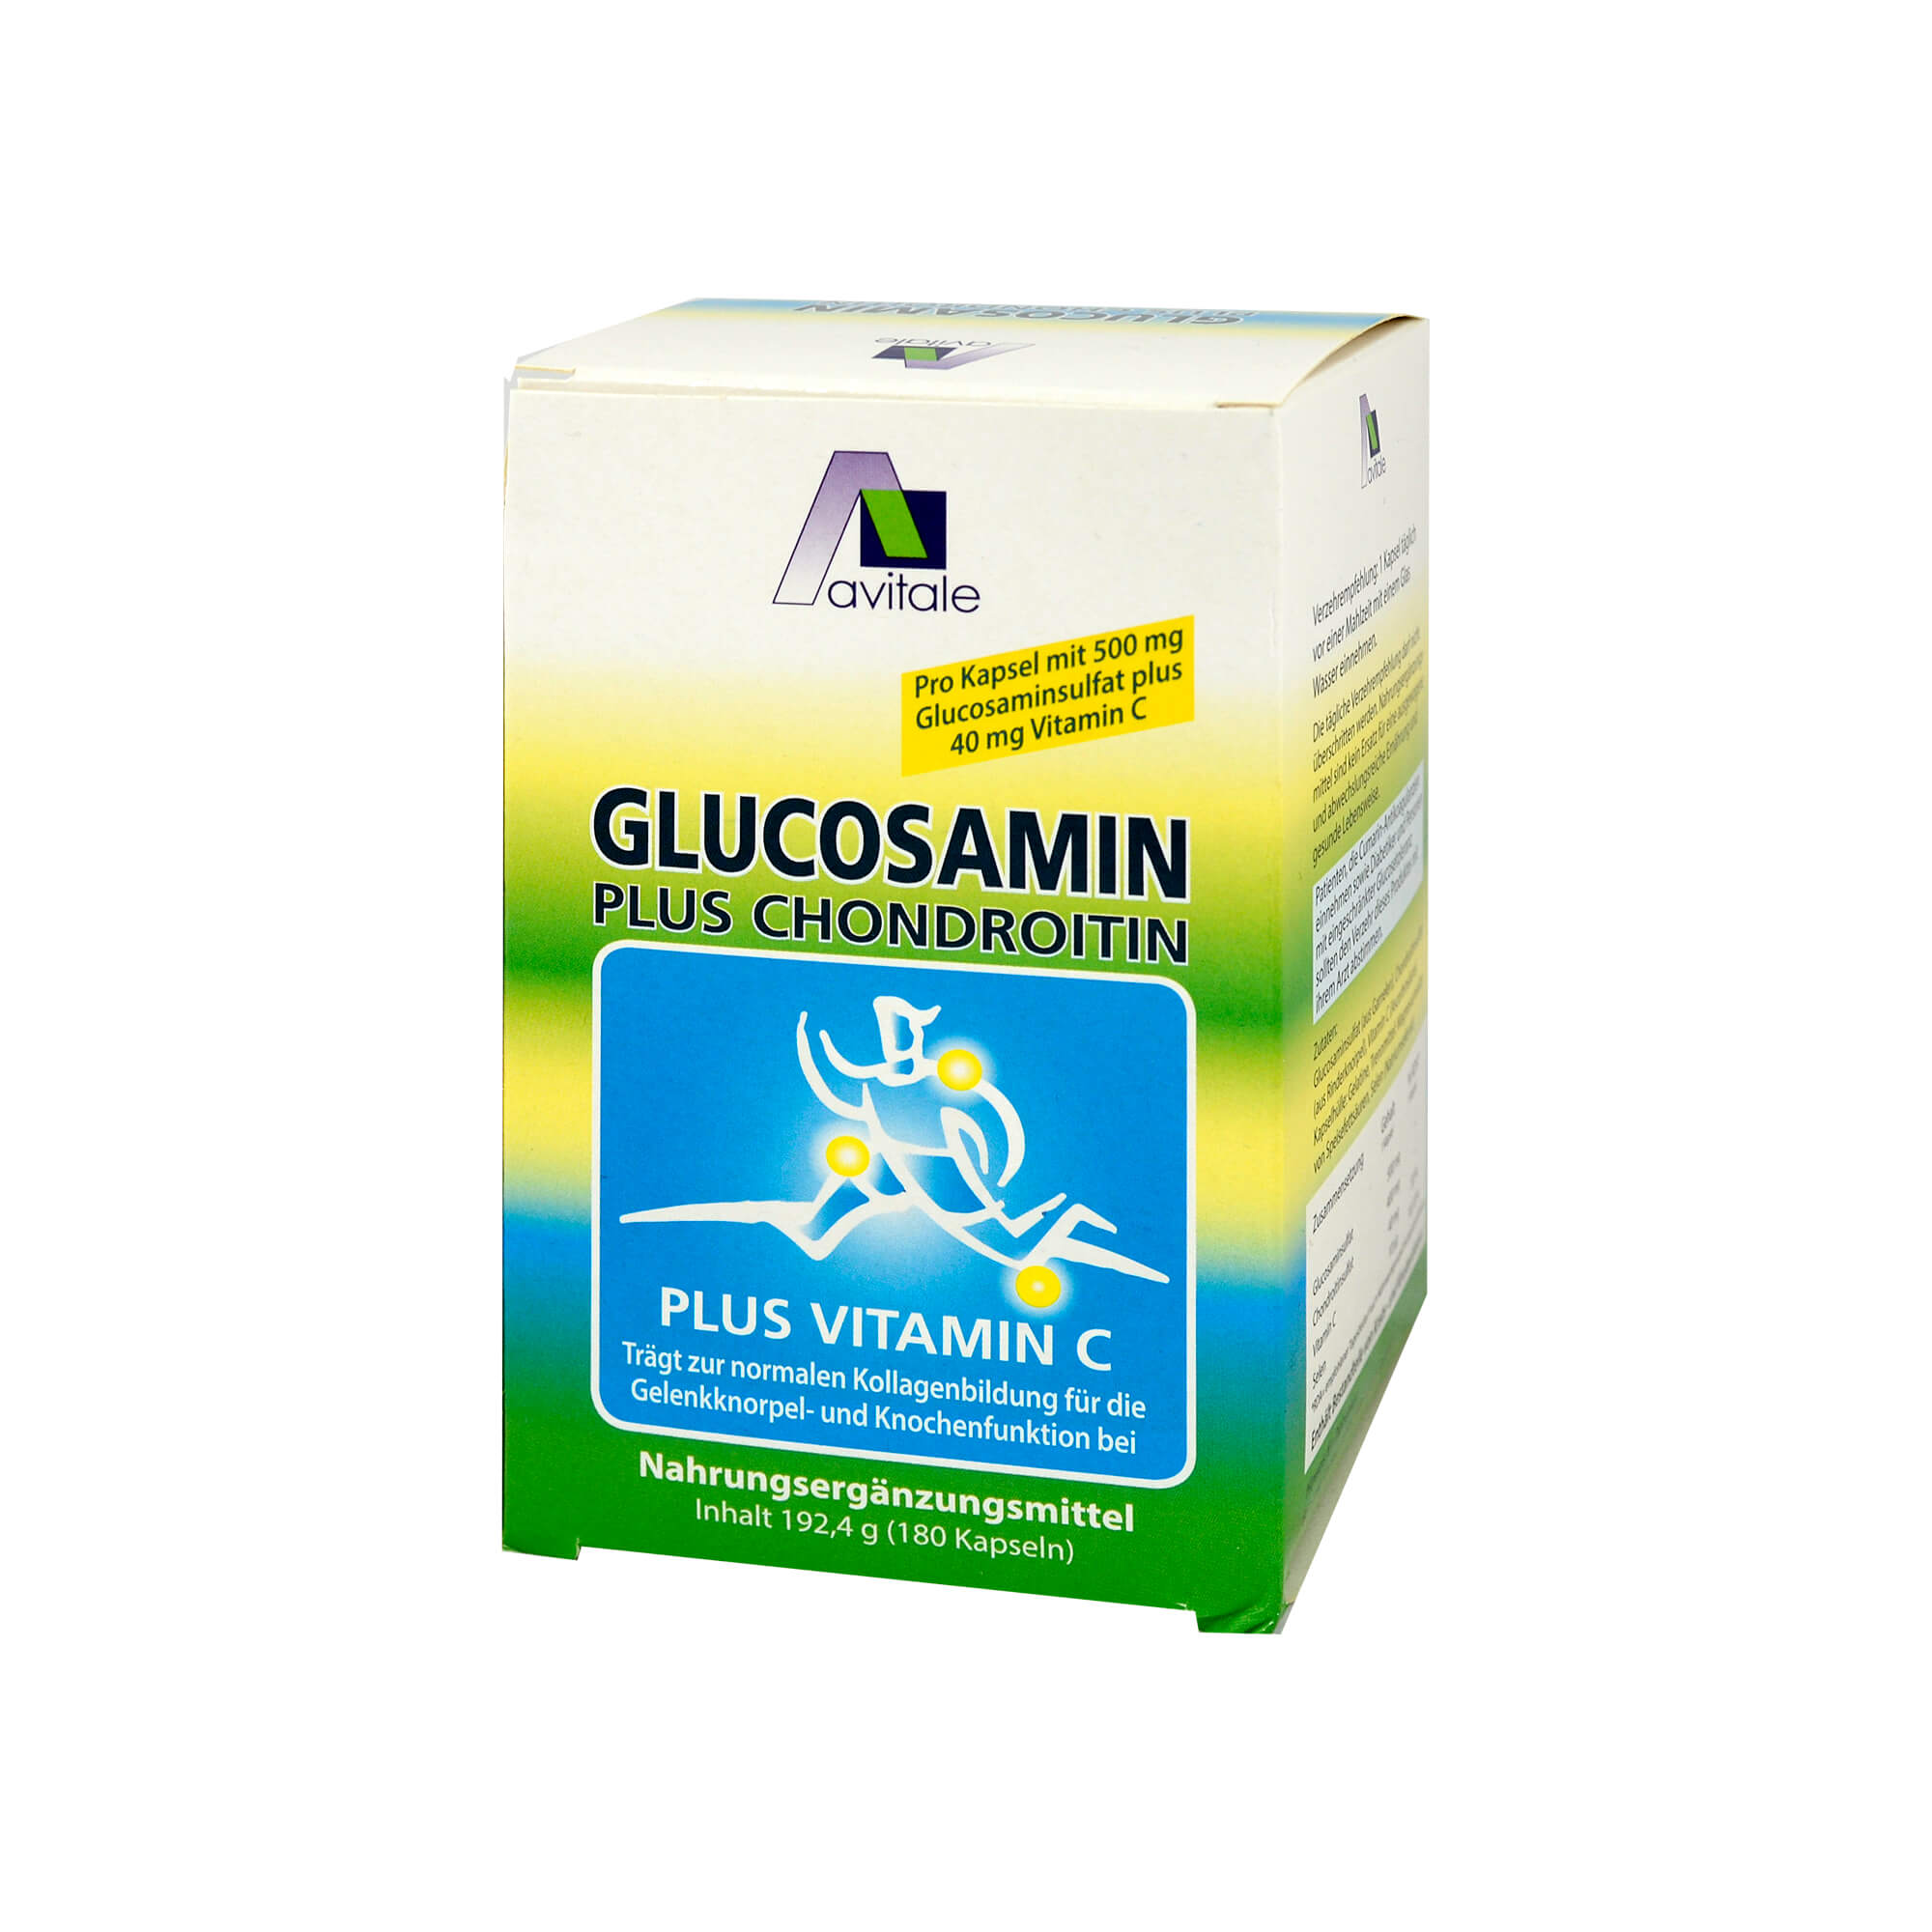 Nahrungsergänzungsmittel mit 500 mg Glucosaminsulfat und 400 mg Chondroitinsulfat.